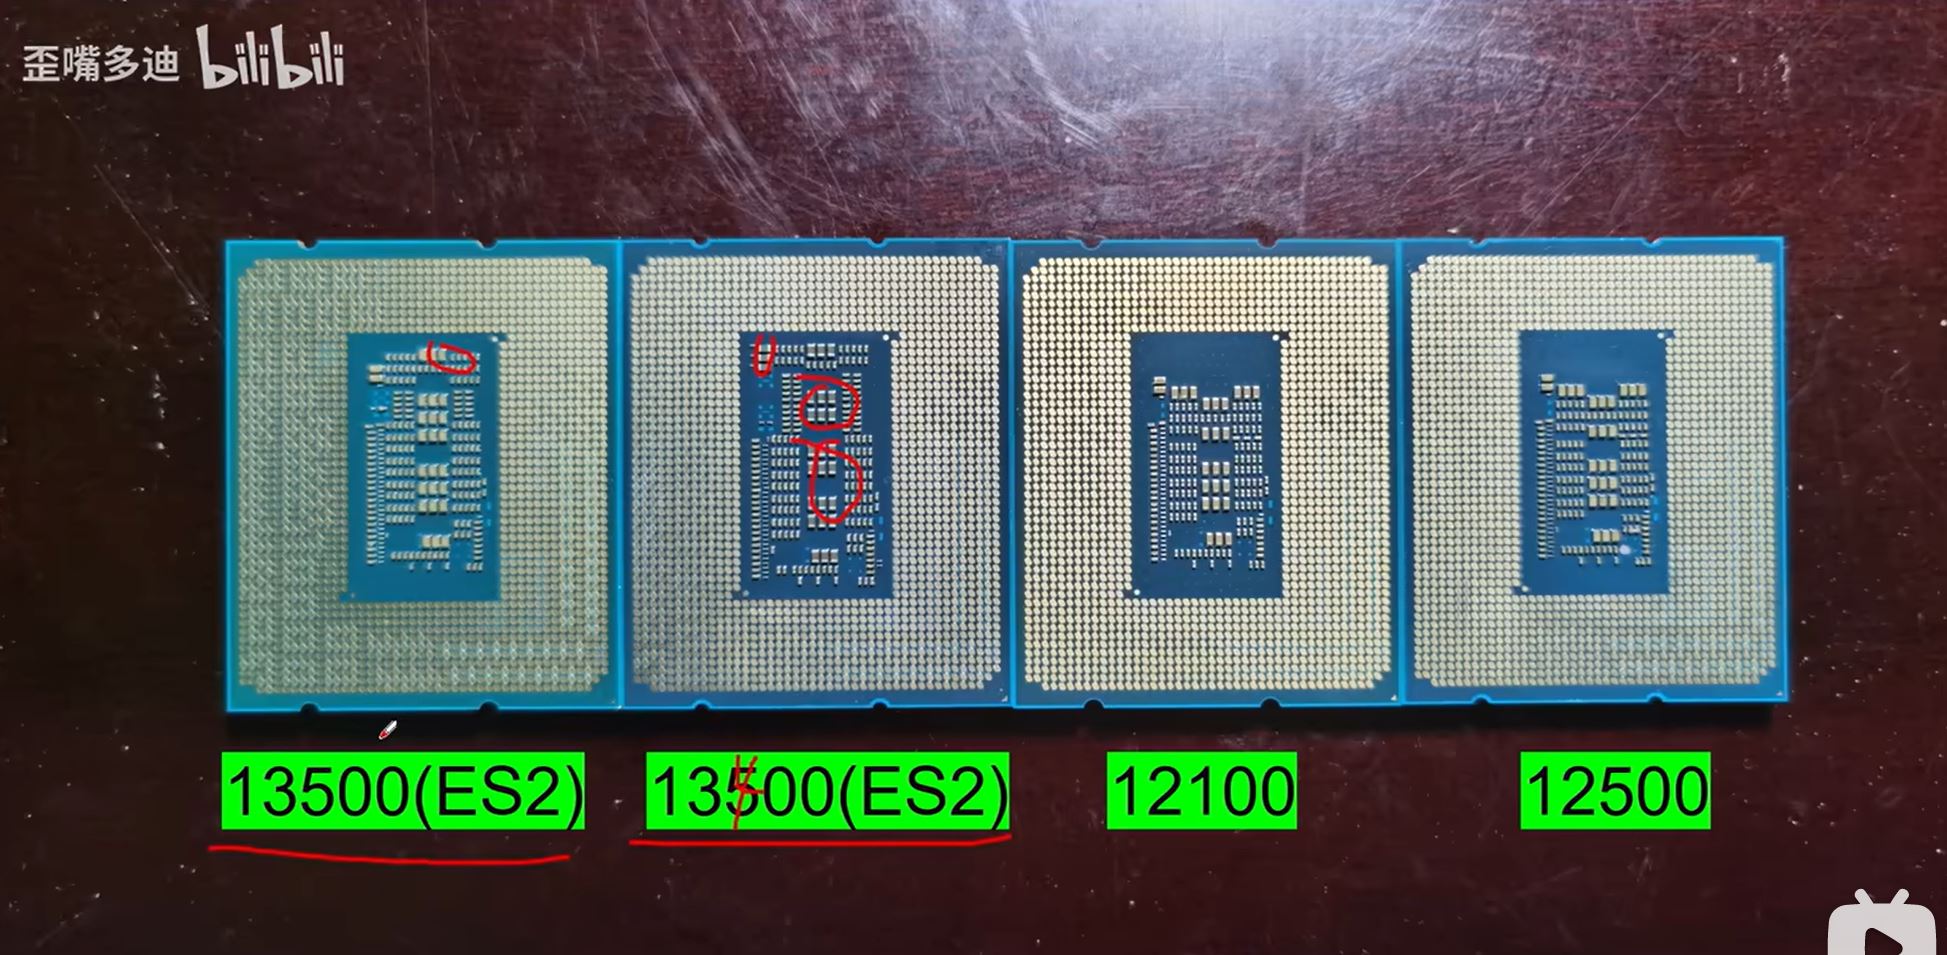 core 13500 13400 es2 hero 2 หลุดภาพซีพียู Intel Core i5 13500 ความเร็ว 4.8Ghz พร้อมผลทดสอบอย่างไม่เป็นทางการ 